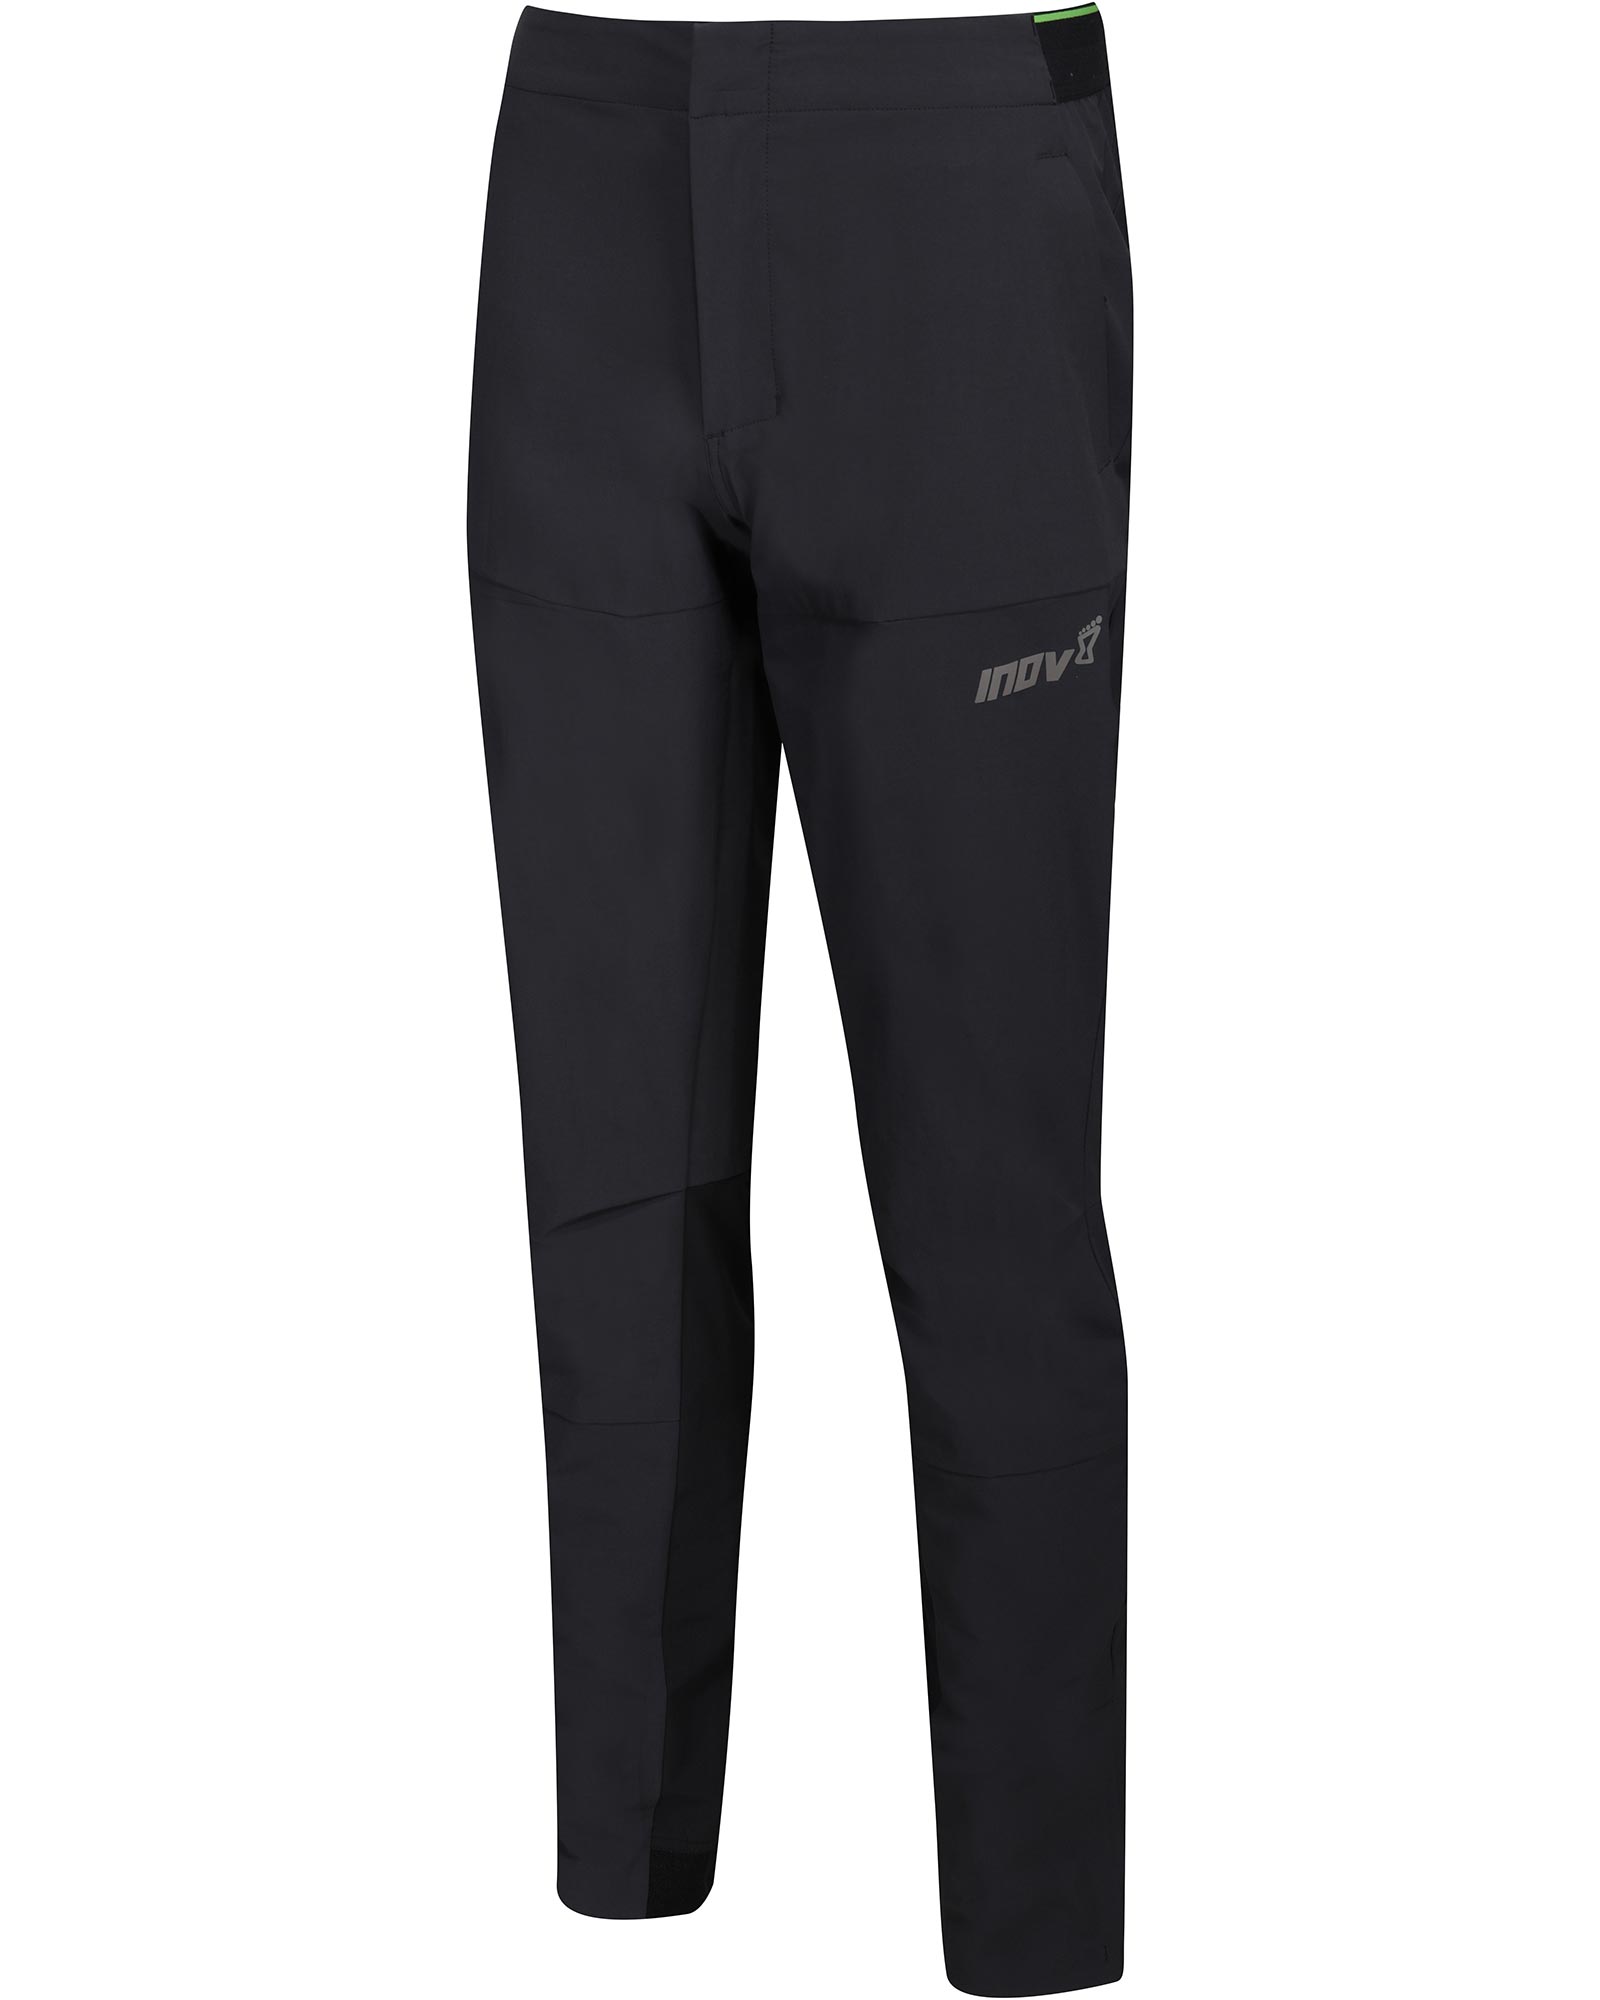 Inov 8 VentureLite Men’s Pants - Black/Graphite XL